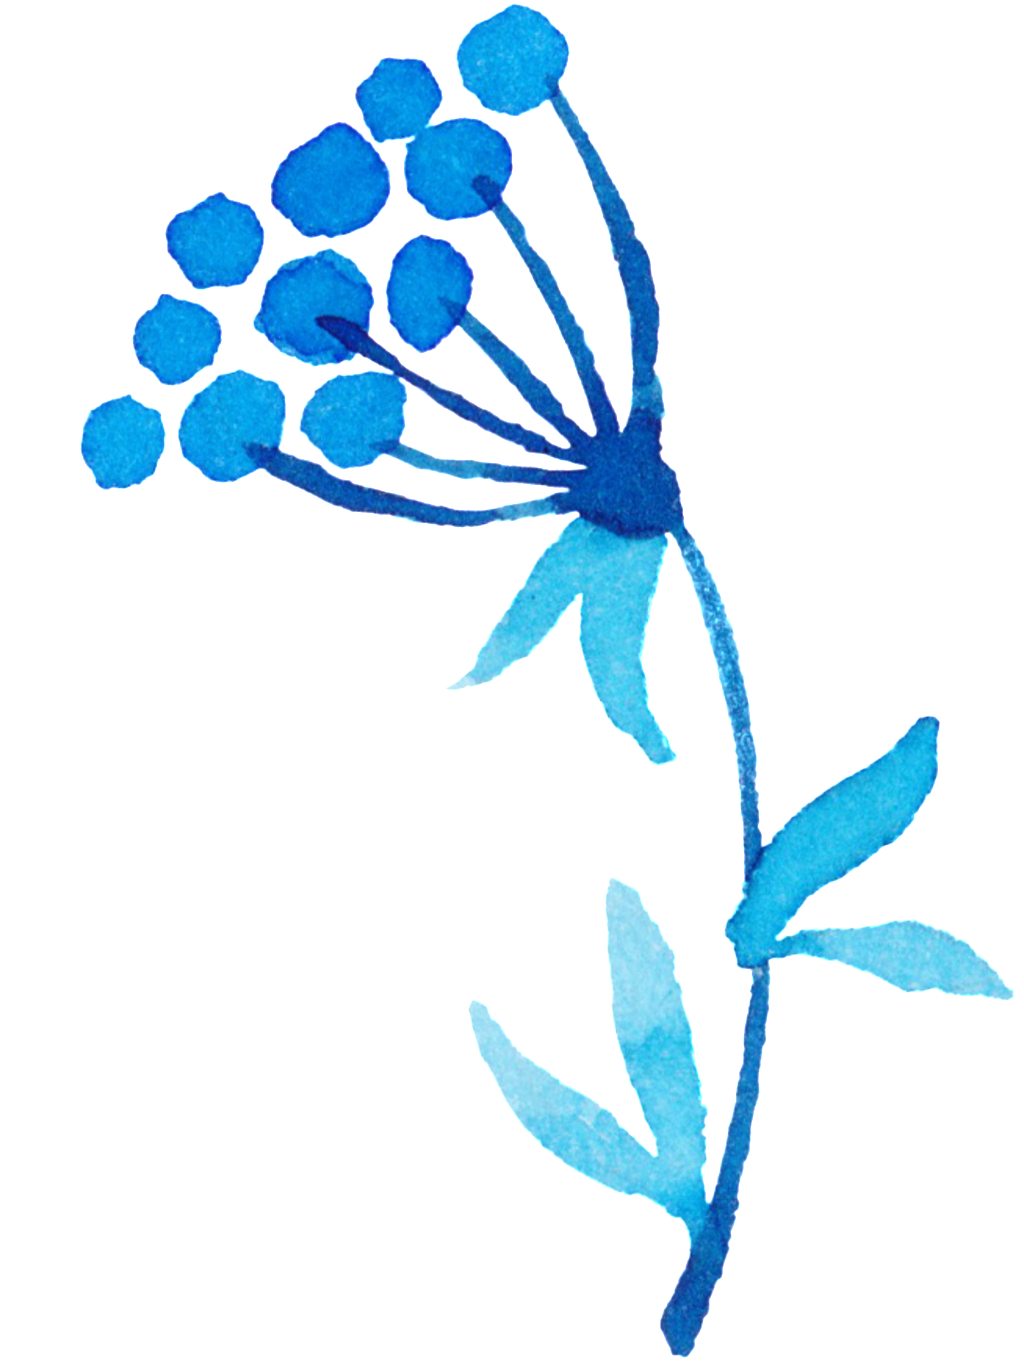 Blue Watercolor Flower Art PNG